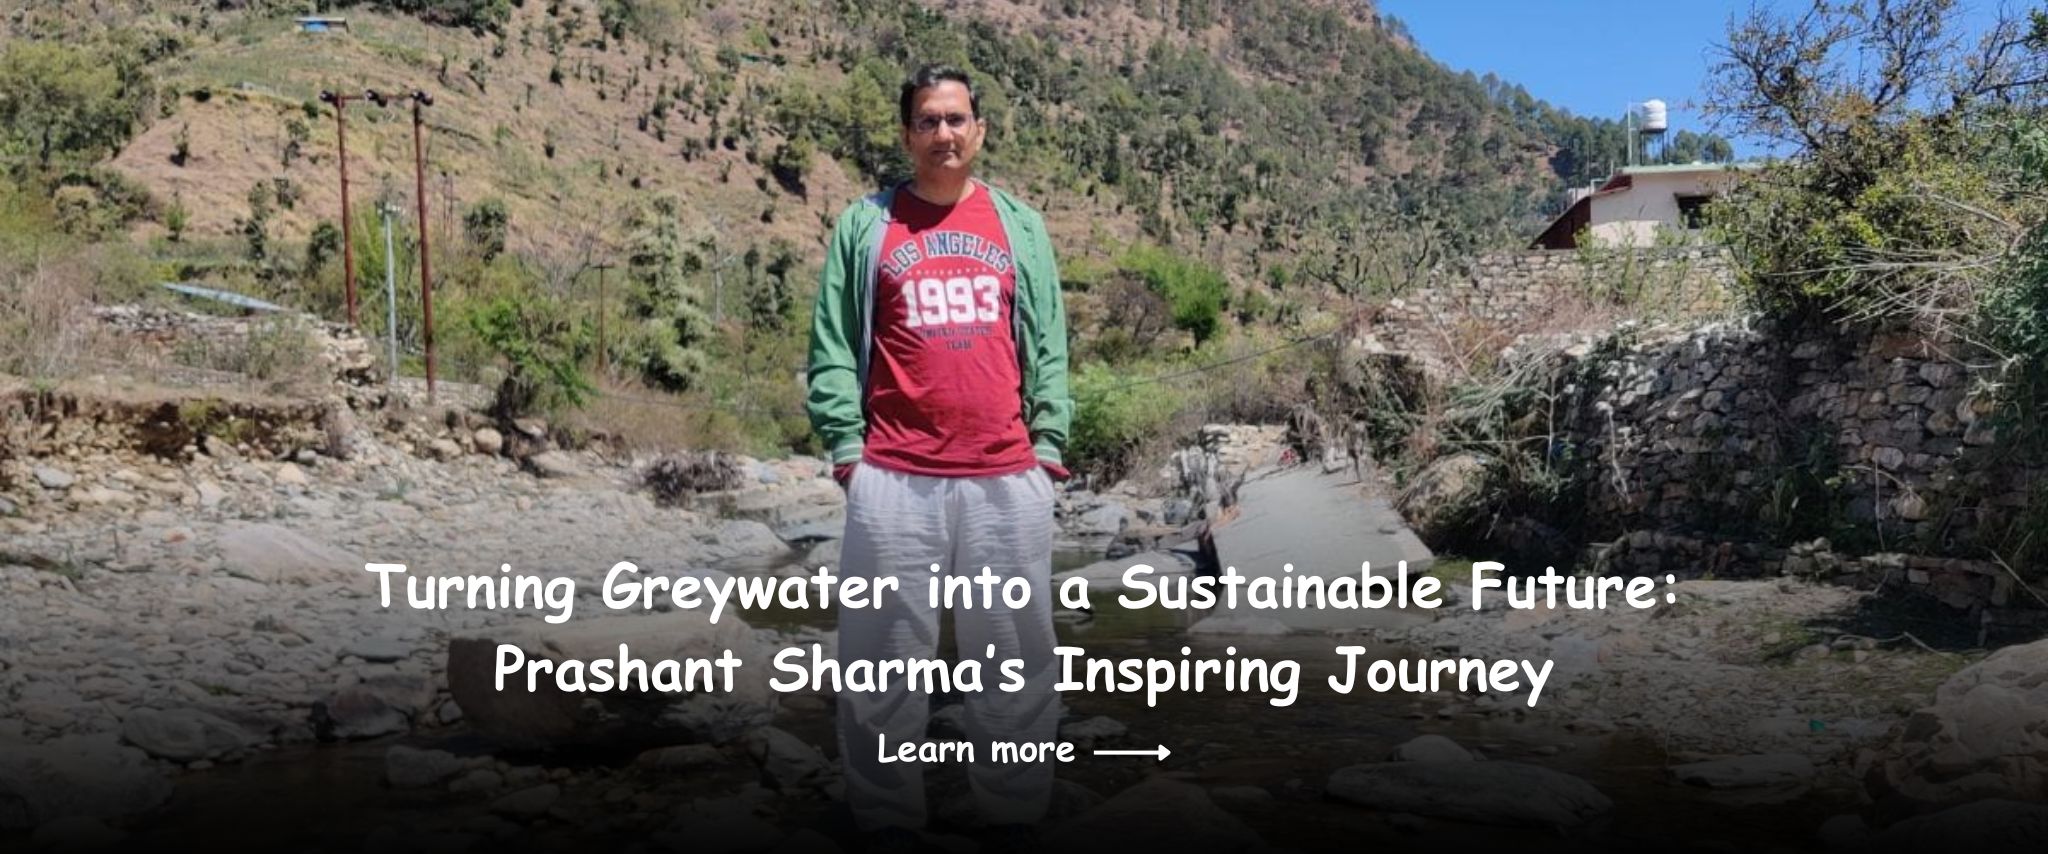 Turning Greywater into a Sustainable Future Prashant Sharmas Inspiring Journey